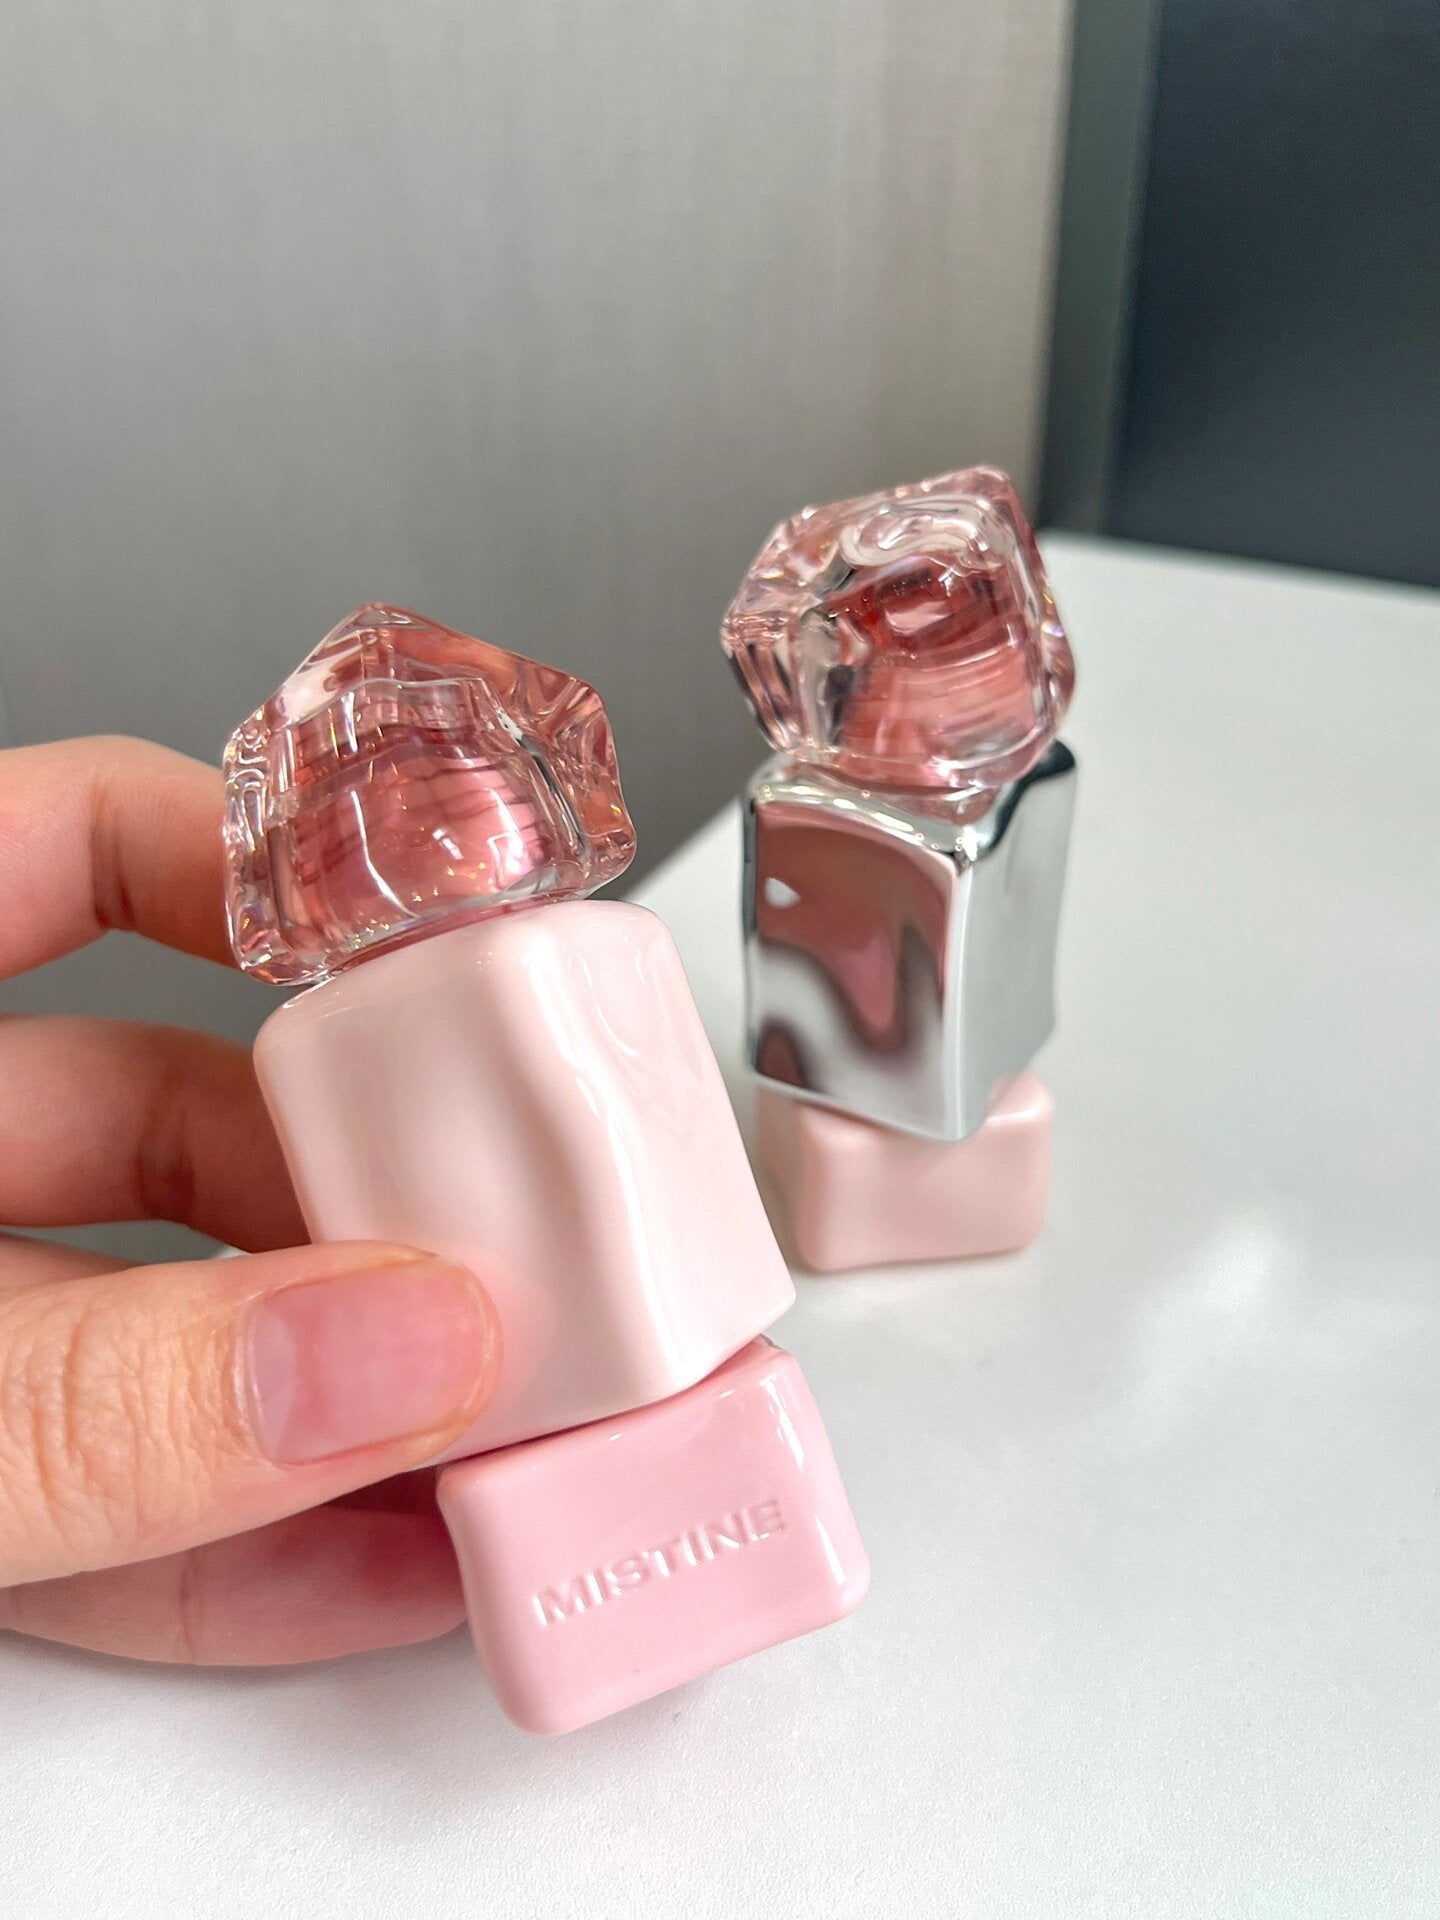 Mistine Moisturizing Matte Pink Limited Edition Lip Glaze 2.6g 2.8g 蜜丝婷滋润哑光粉色限定版唇釉